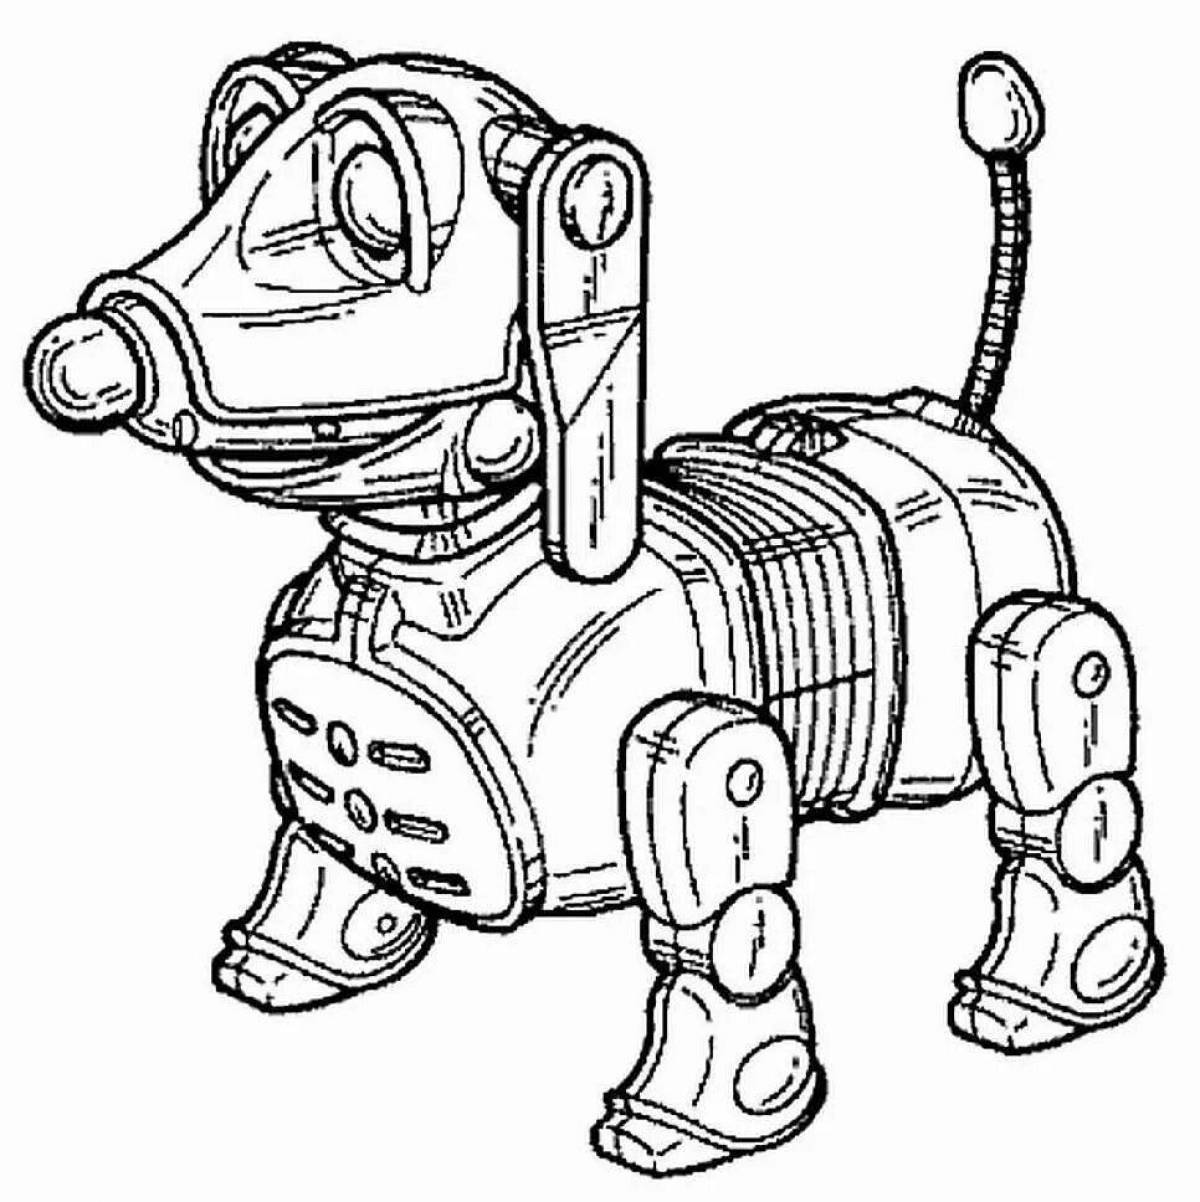 Robot dog #16